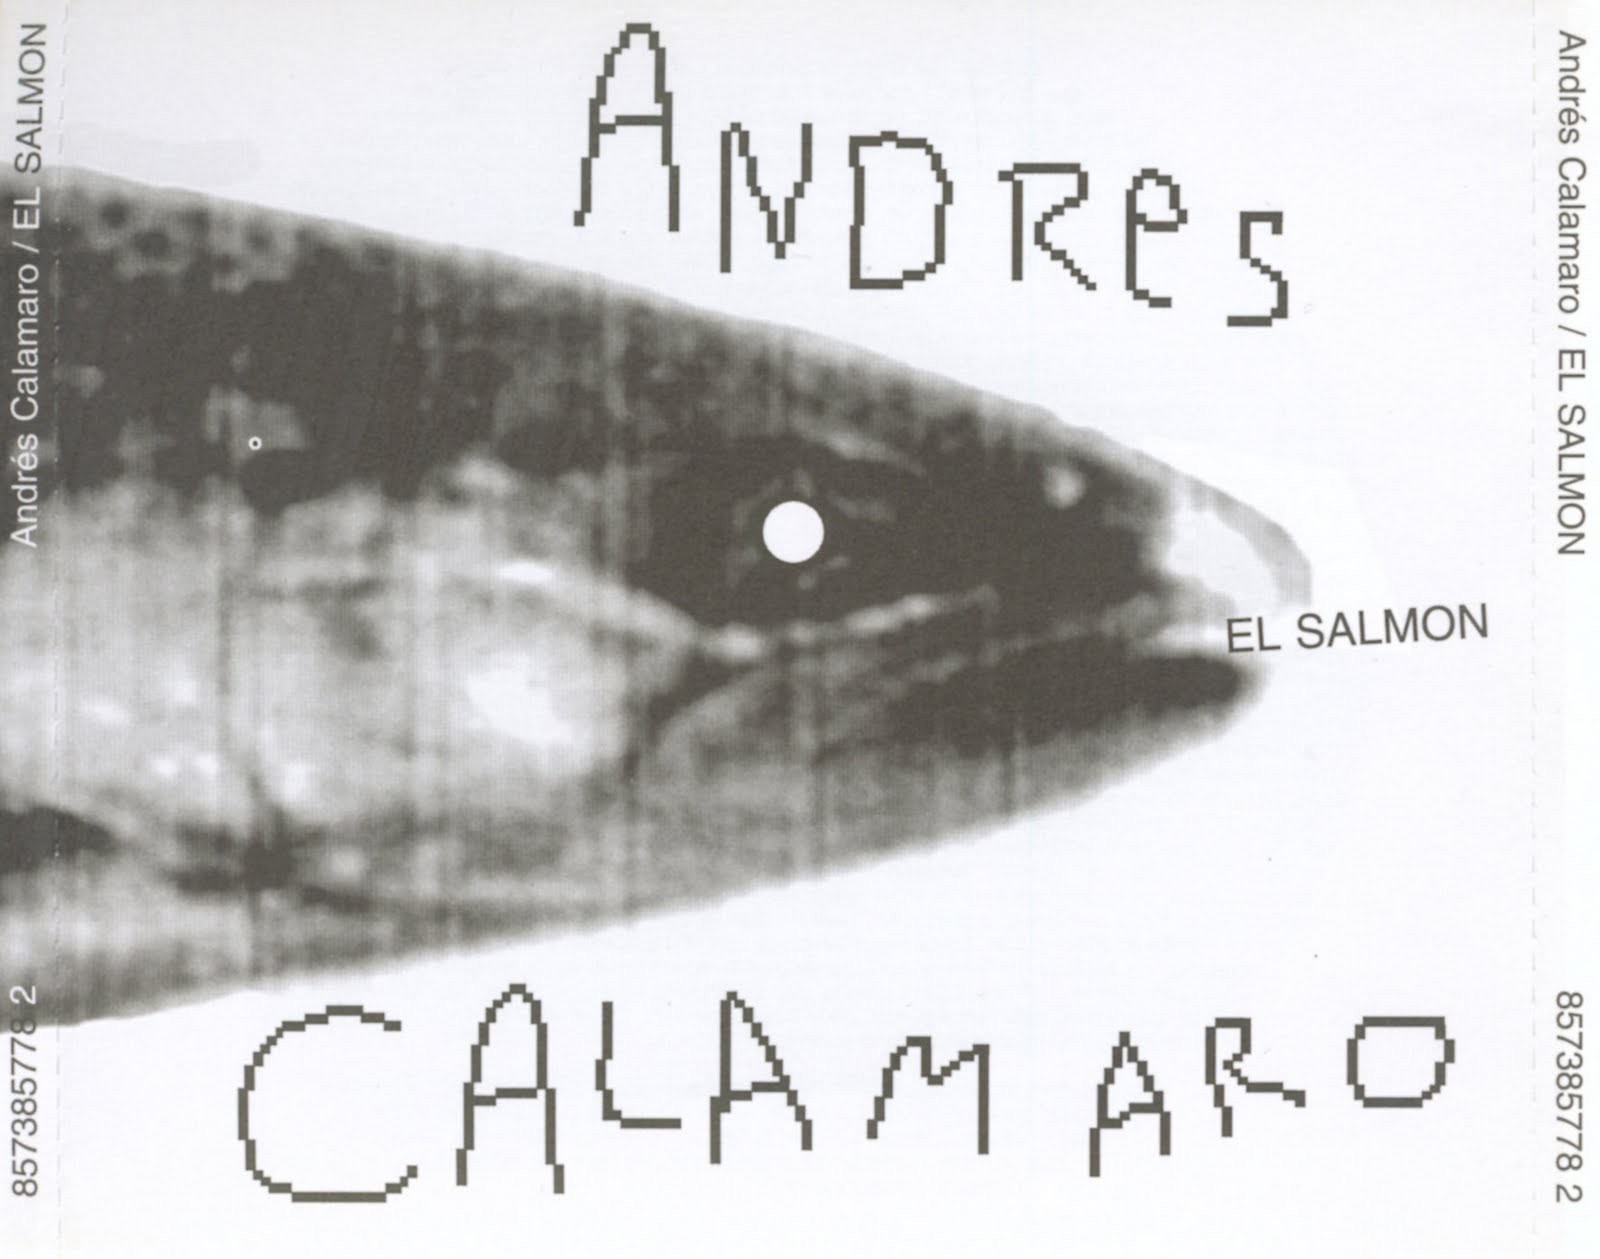 http://4.bp.blogspot.com/_gmS0UyHUdhM/TO0t85M5dzI/AAAAAAAAEbk/_wUO7pKwBEQ/s1600/Andres-Calamaro-El-Salmon-Delantera.jpg